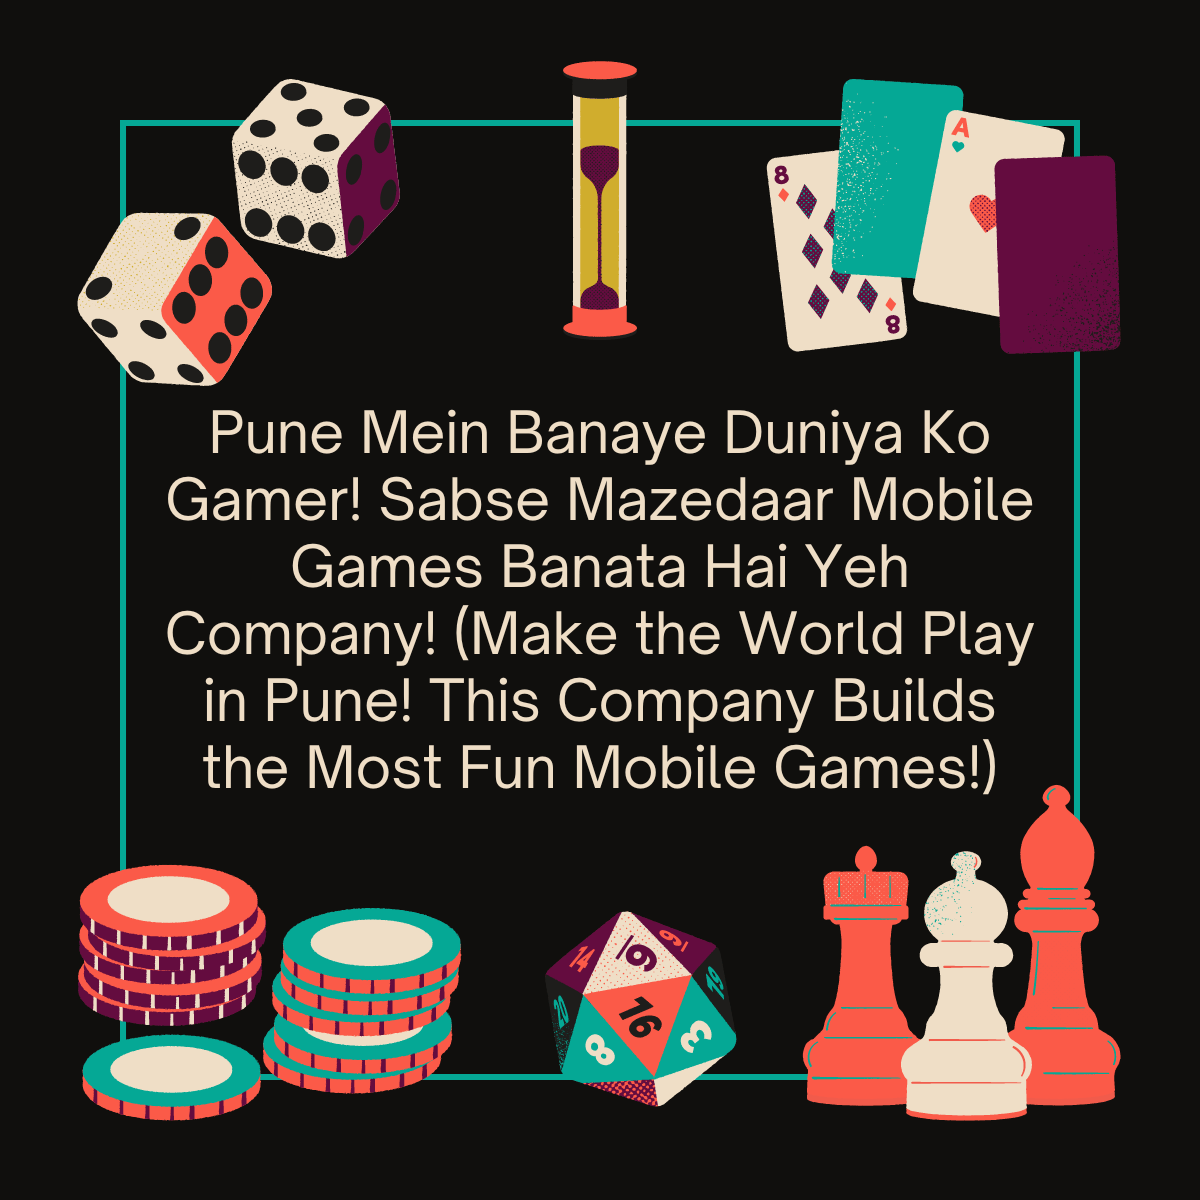 Pune Mein Banaye Duniya Ko Gamer! Sabse Mazedaar Mobile Games Banata Hai Yeh Company! (Make the World Play in Pune! This Company Builds the Most Fun Mobile Games!)